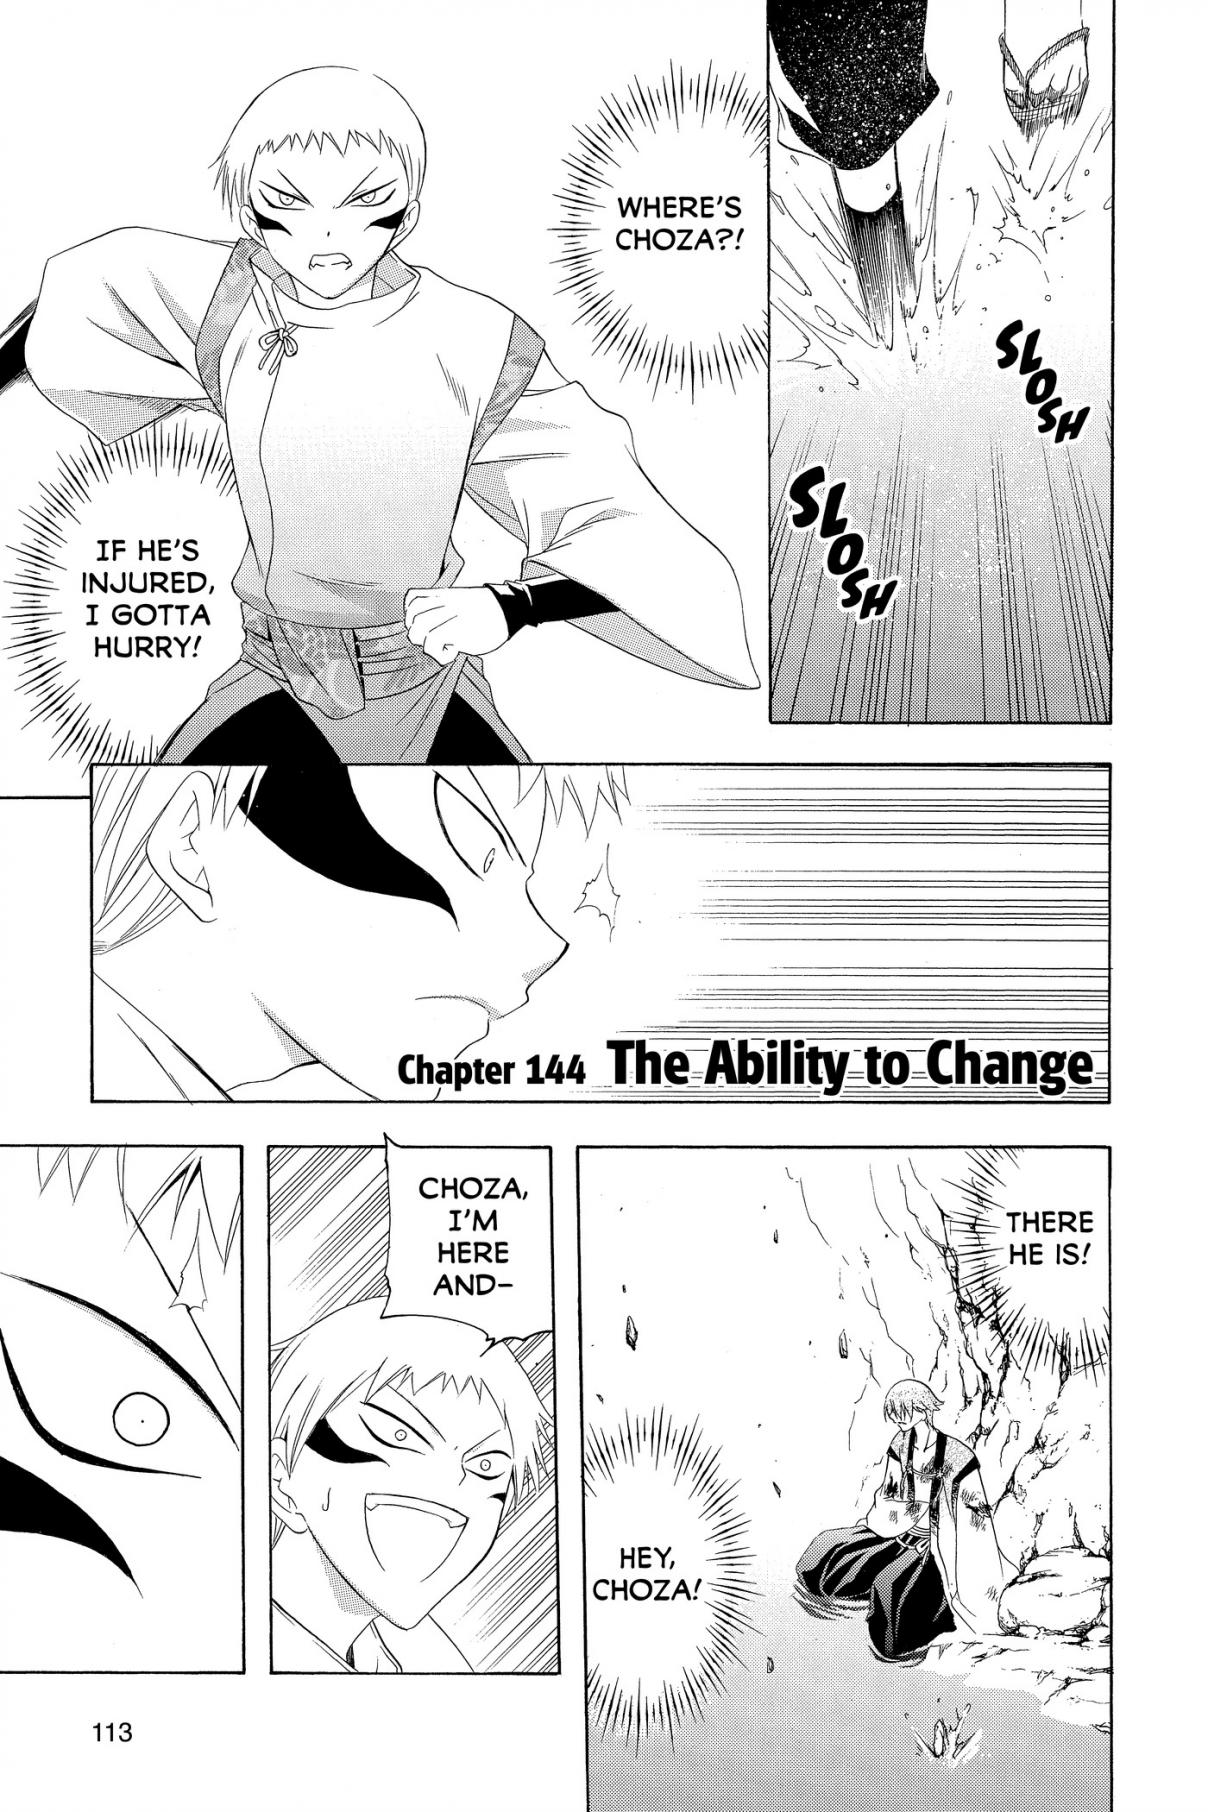 Itsuwaribito Utsuho Vol. 15 Ch. 144 Ability to Change